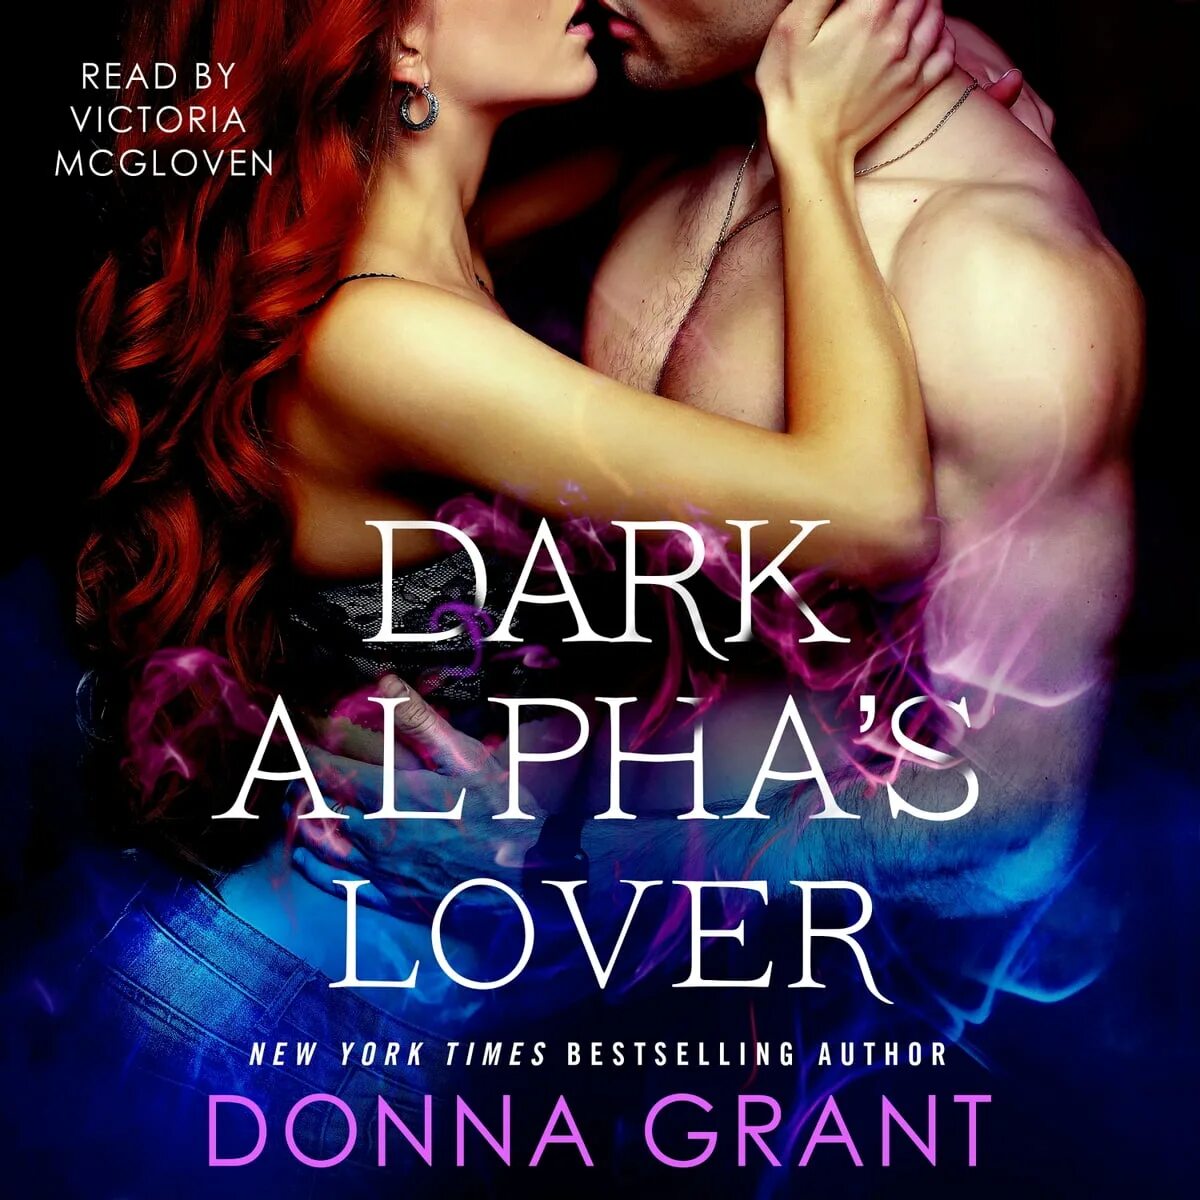 Dark lovers. Кирстен Грант книги. Читать книгу огня и пламени Донна Грант. Alphas love